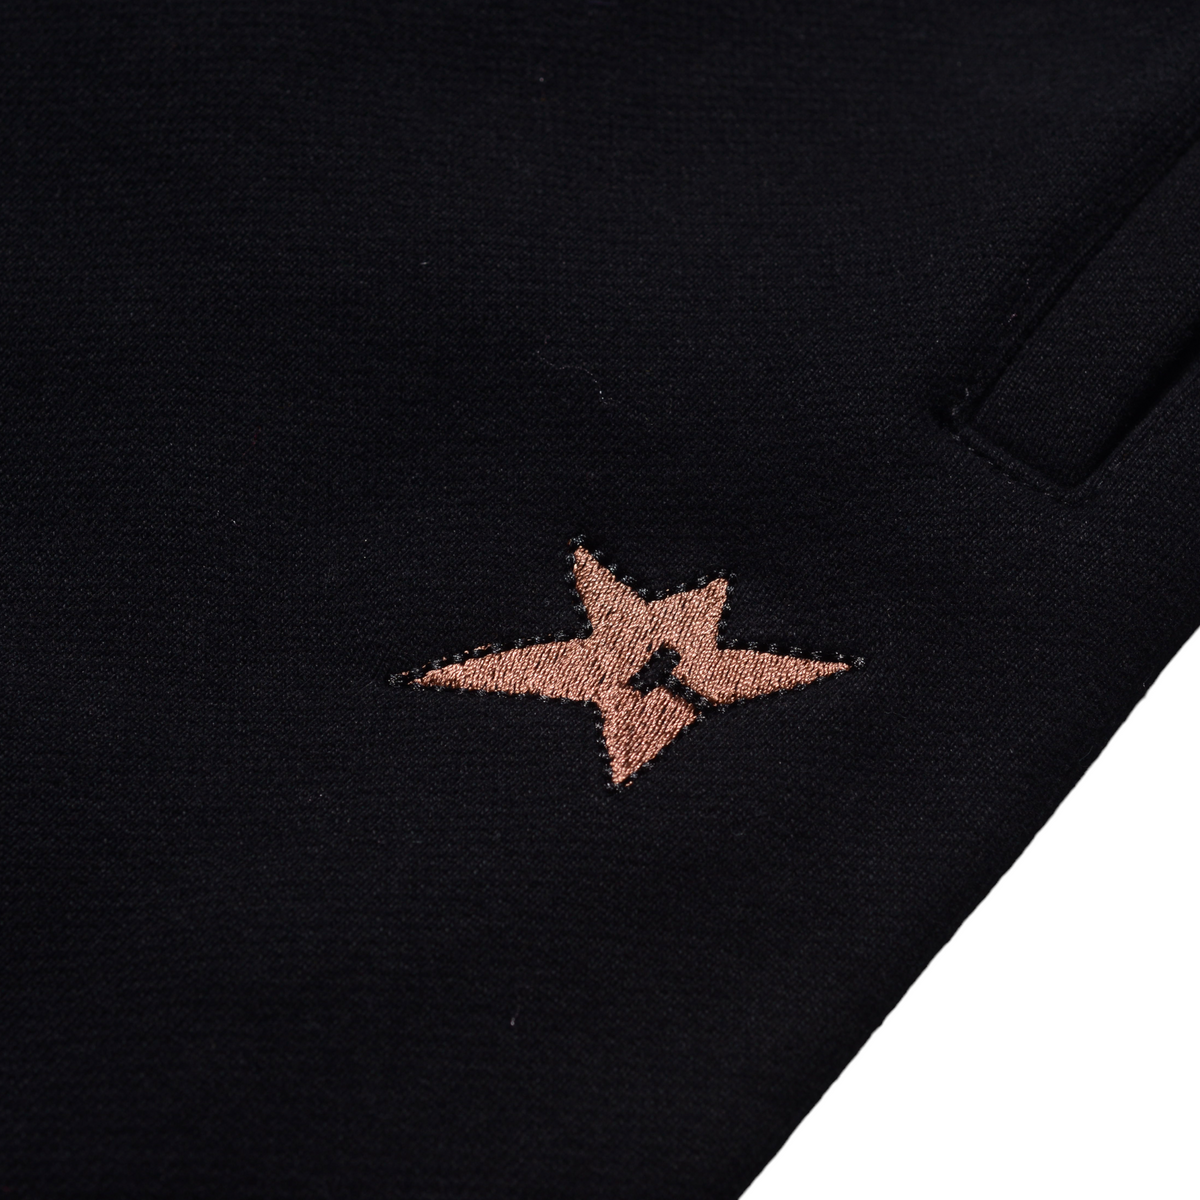 Carpet Co. C Star Sweatpants Black